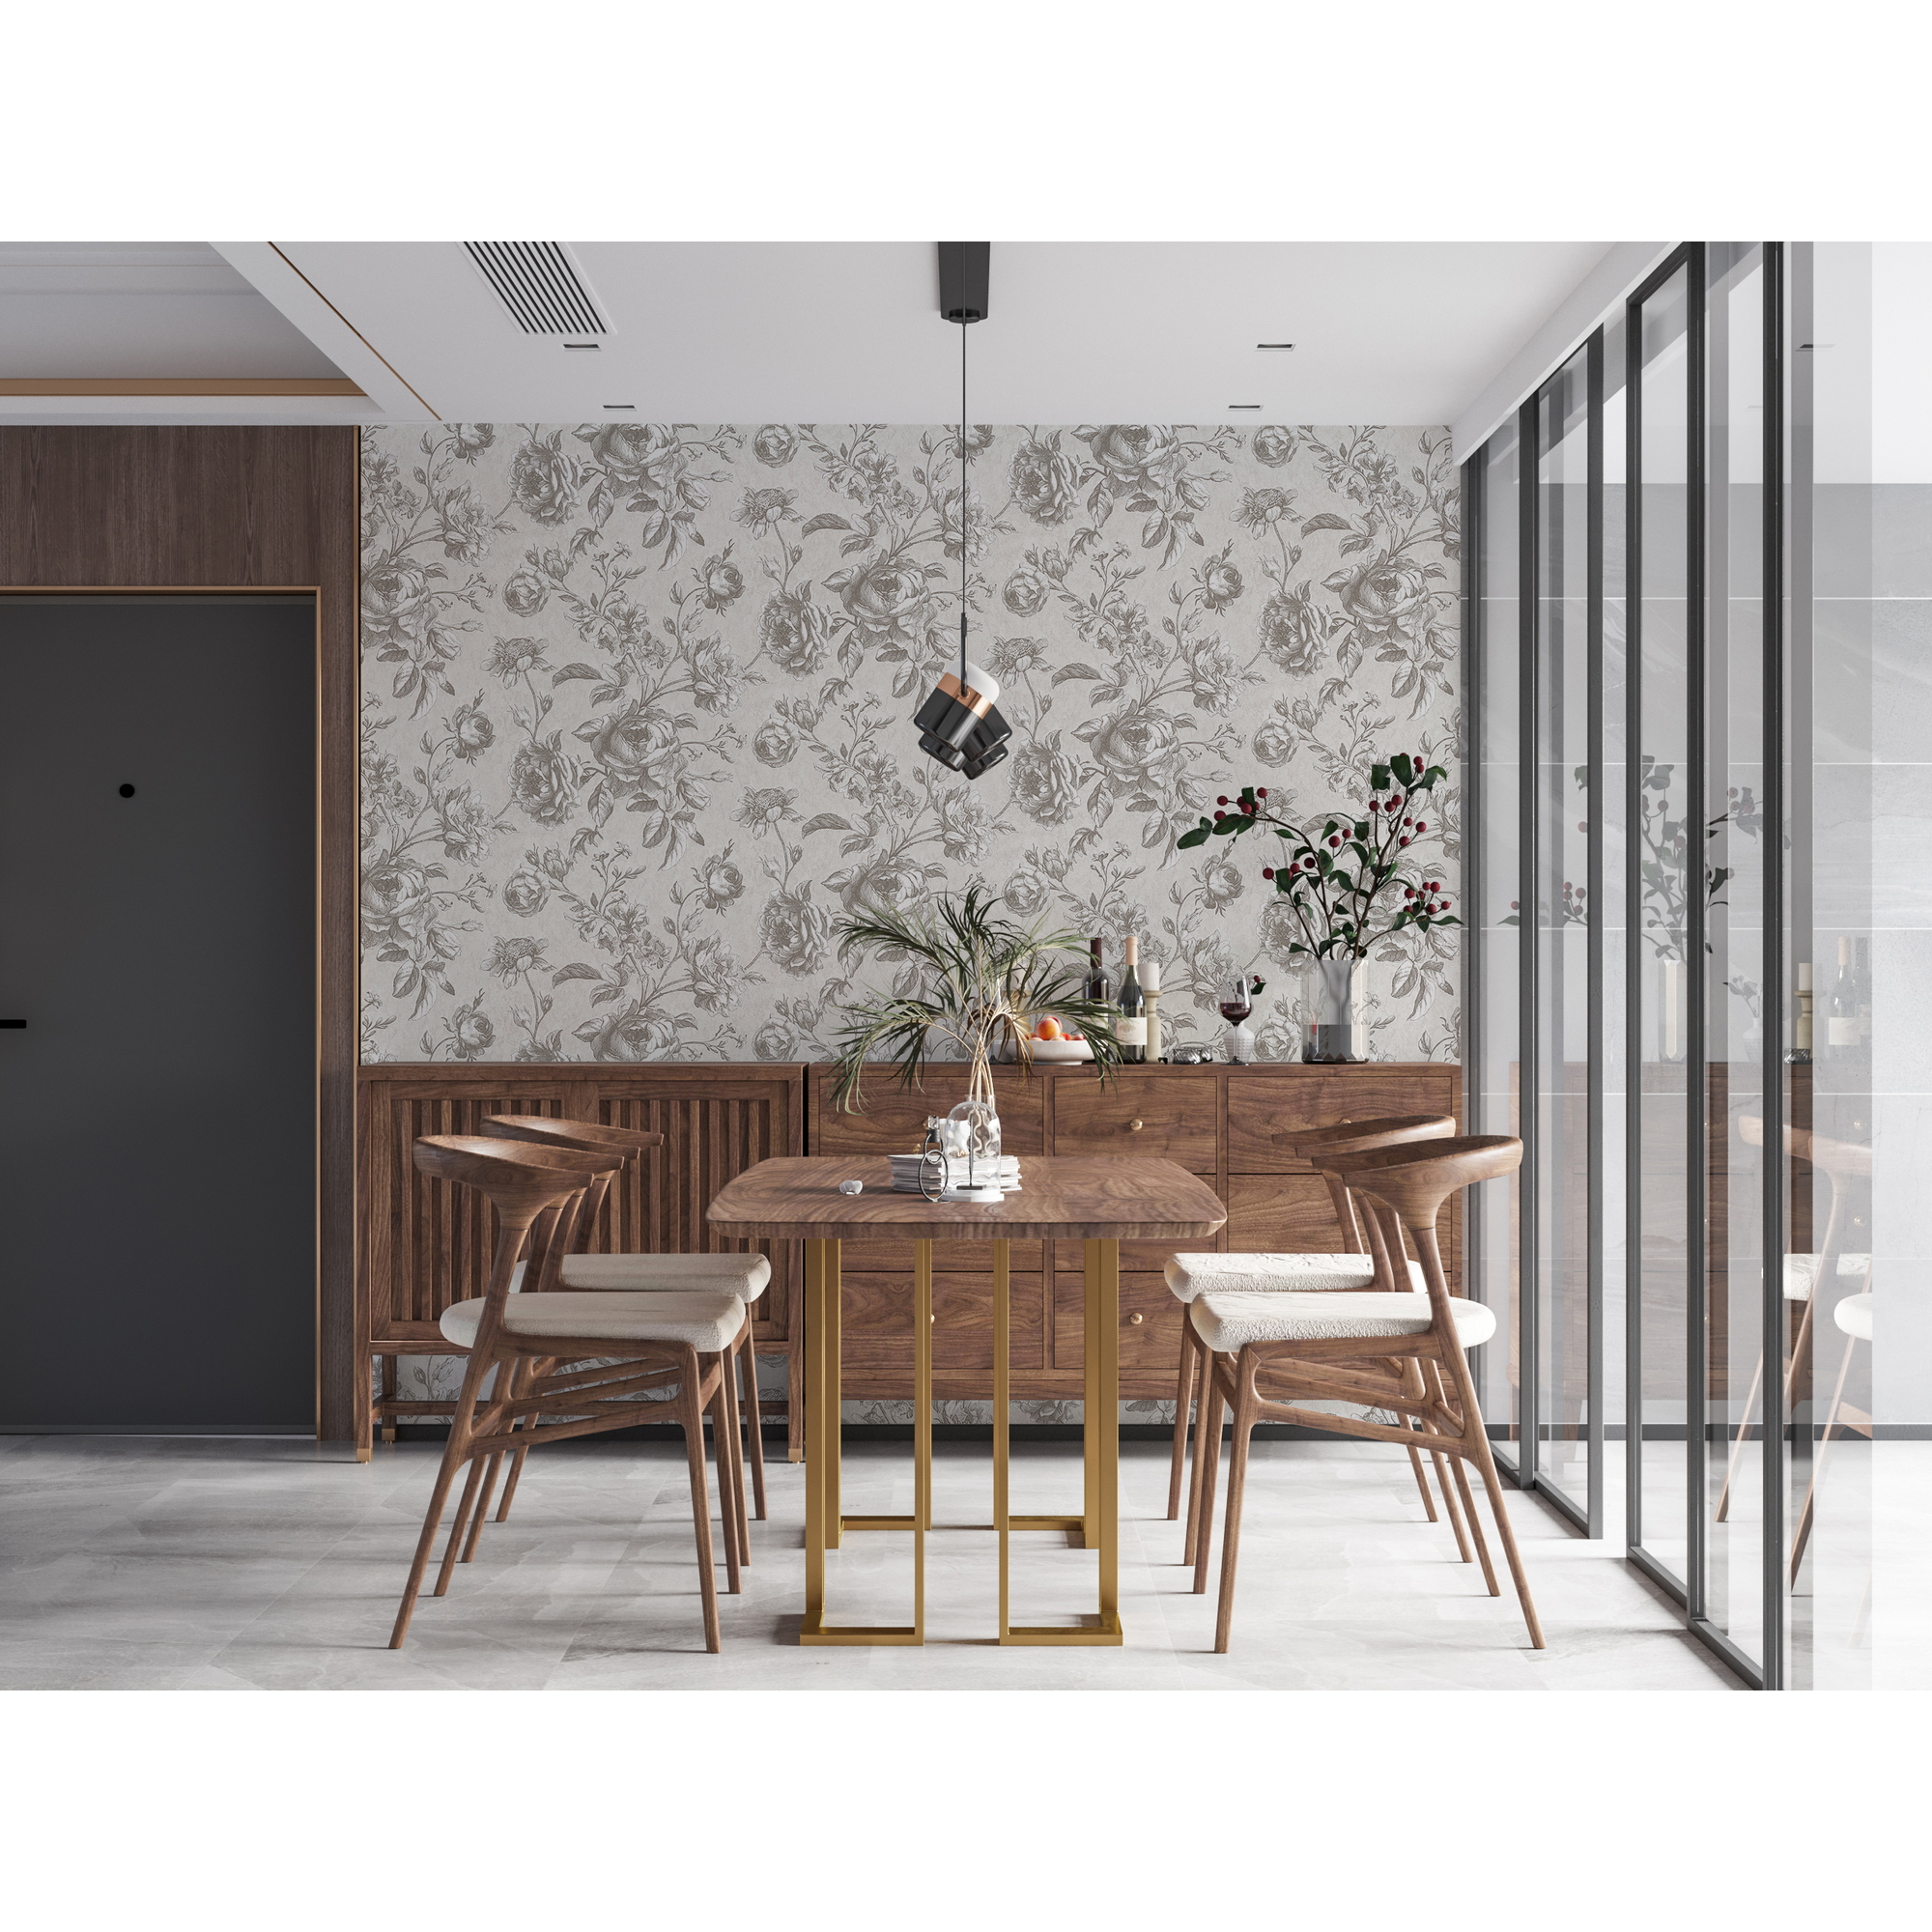 Vliestapete 'My Home. My Spa.' Rosen grau/weiß 10,05 x 0,53 m + product picture